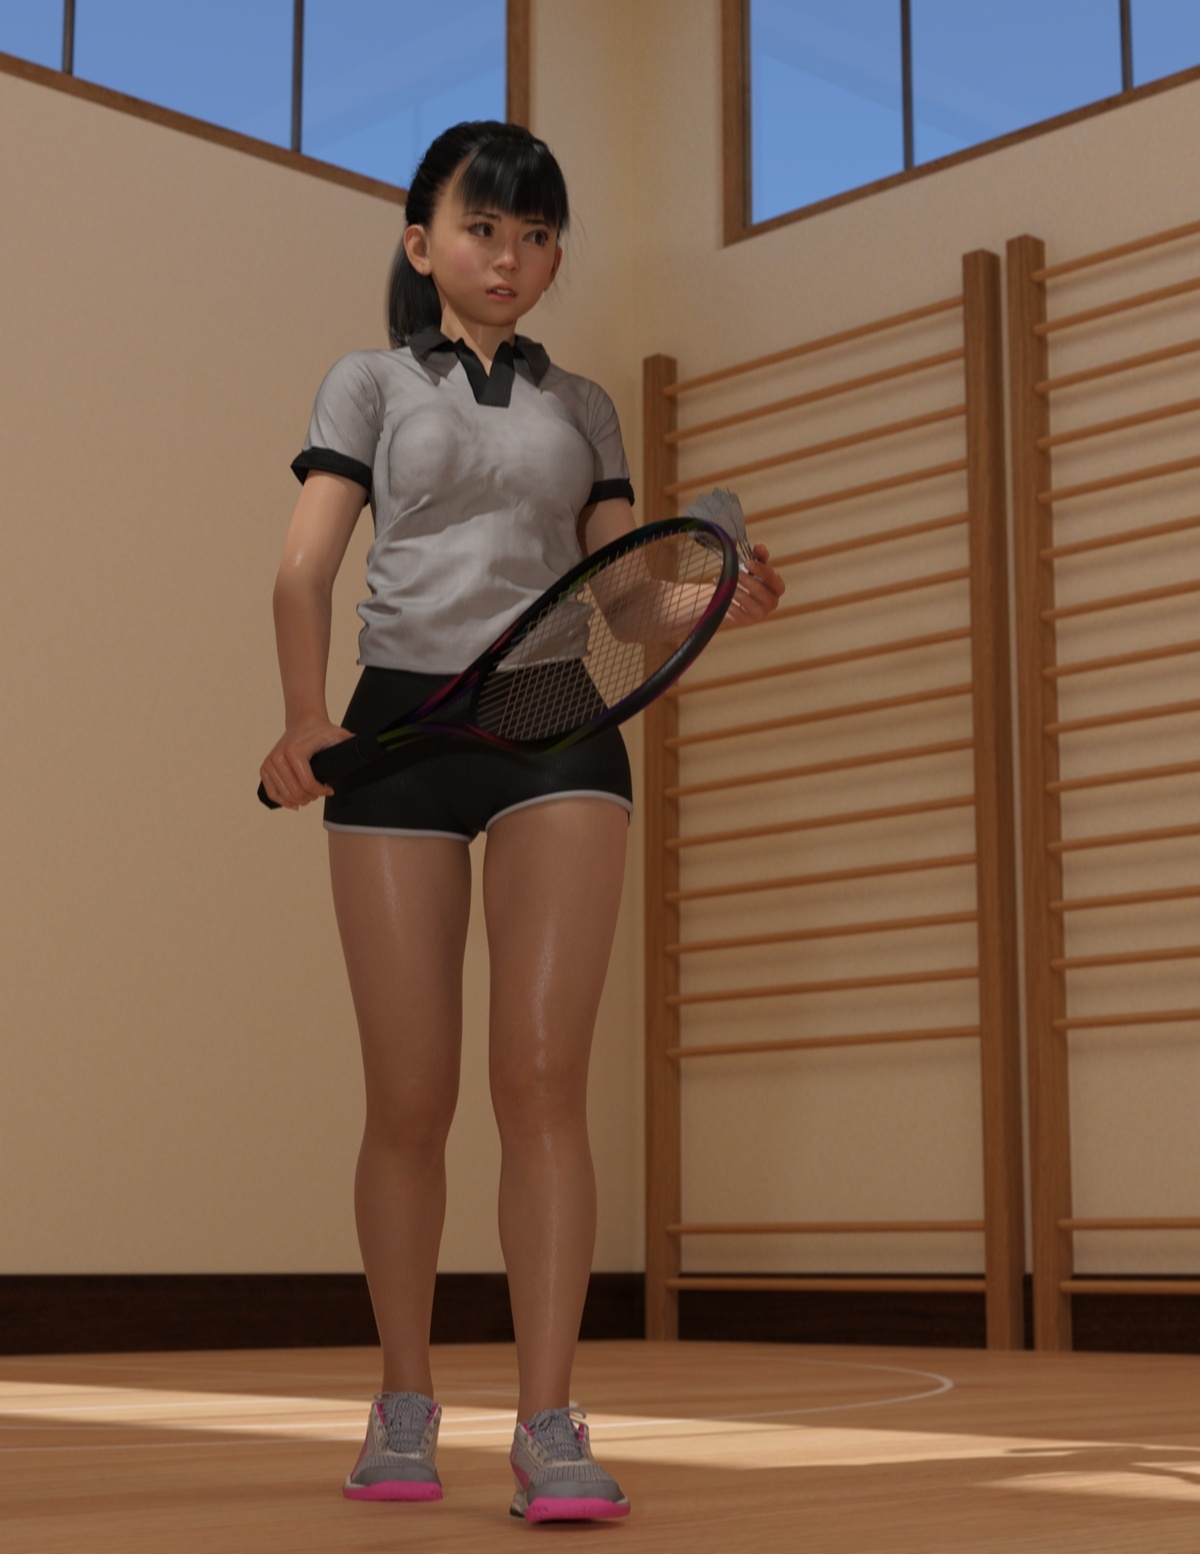 [Acrobatic Sarasara] A competitive sixth-grade girl who attends badminton school 0